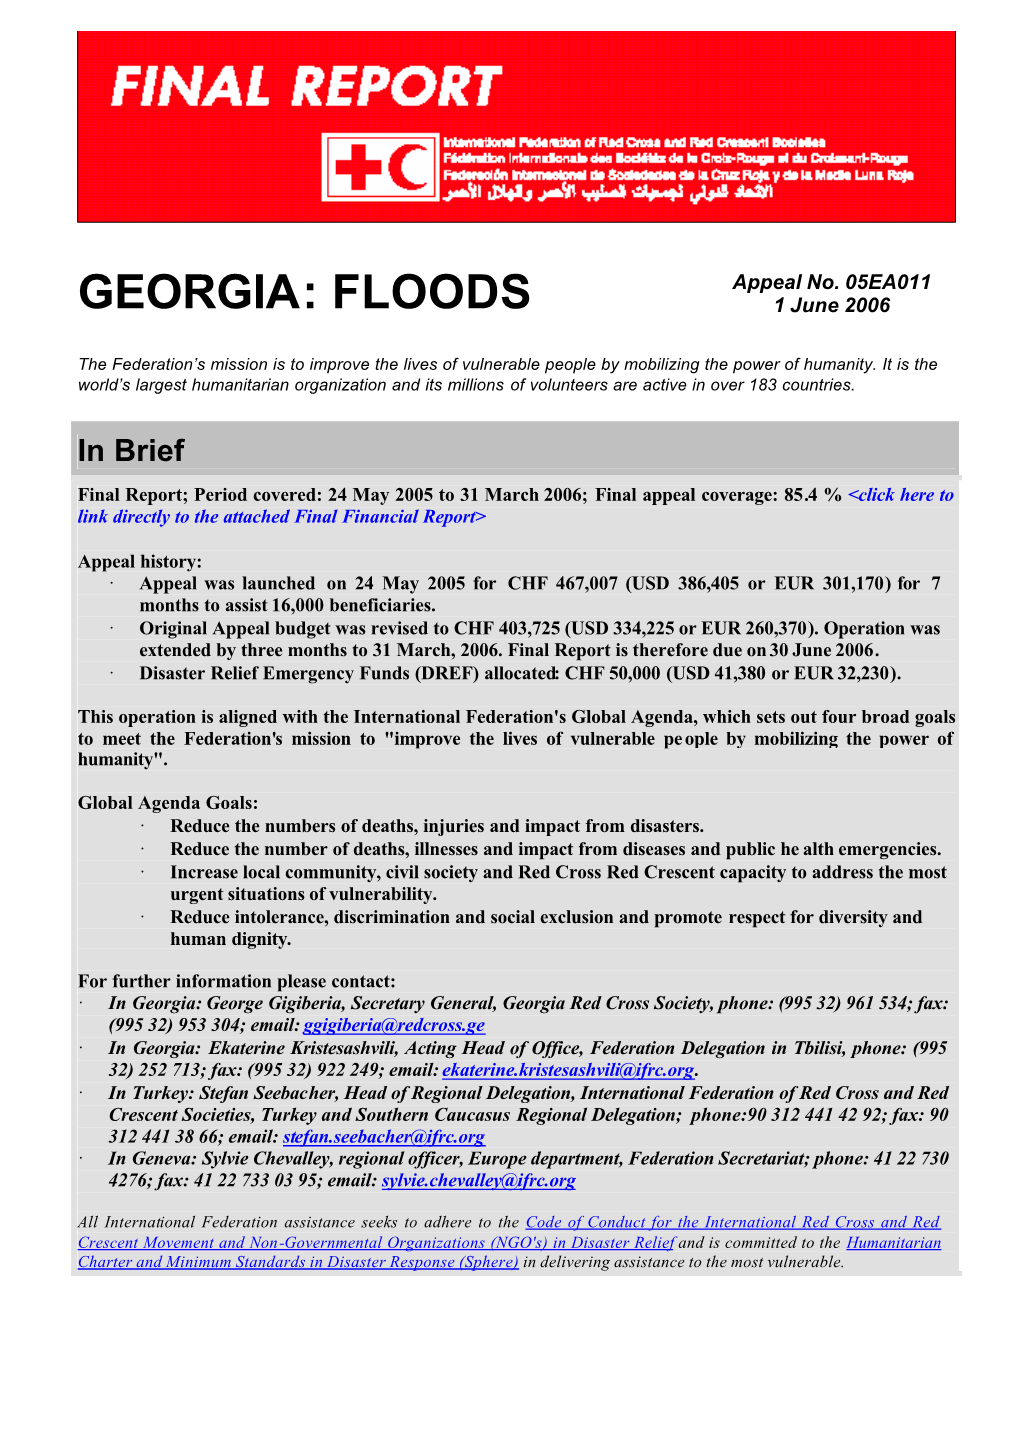 IFRC-Georgia Floods Emergency Appeal